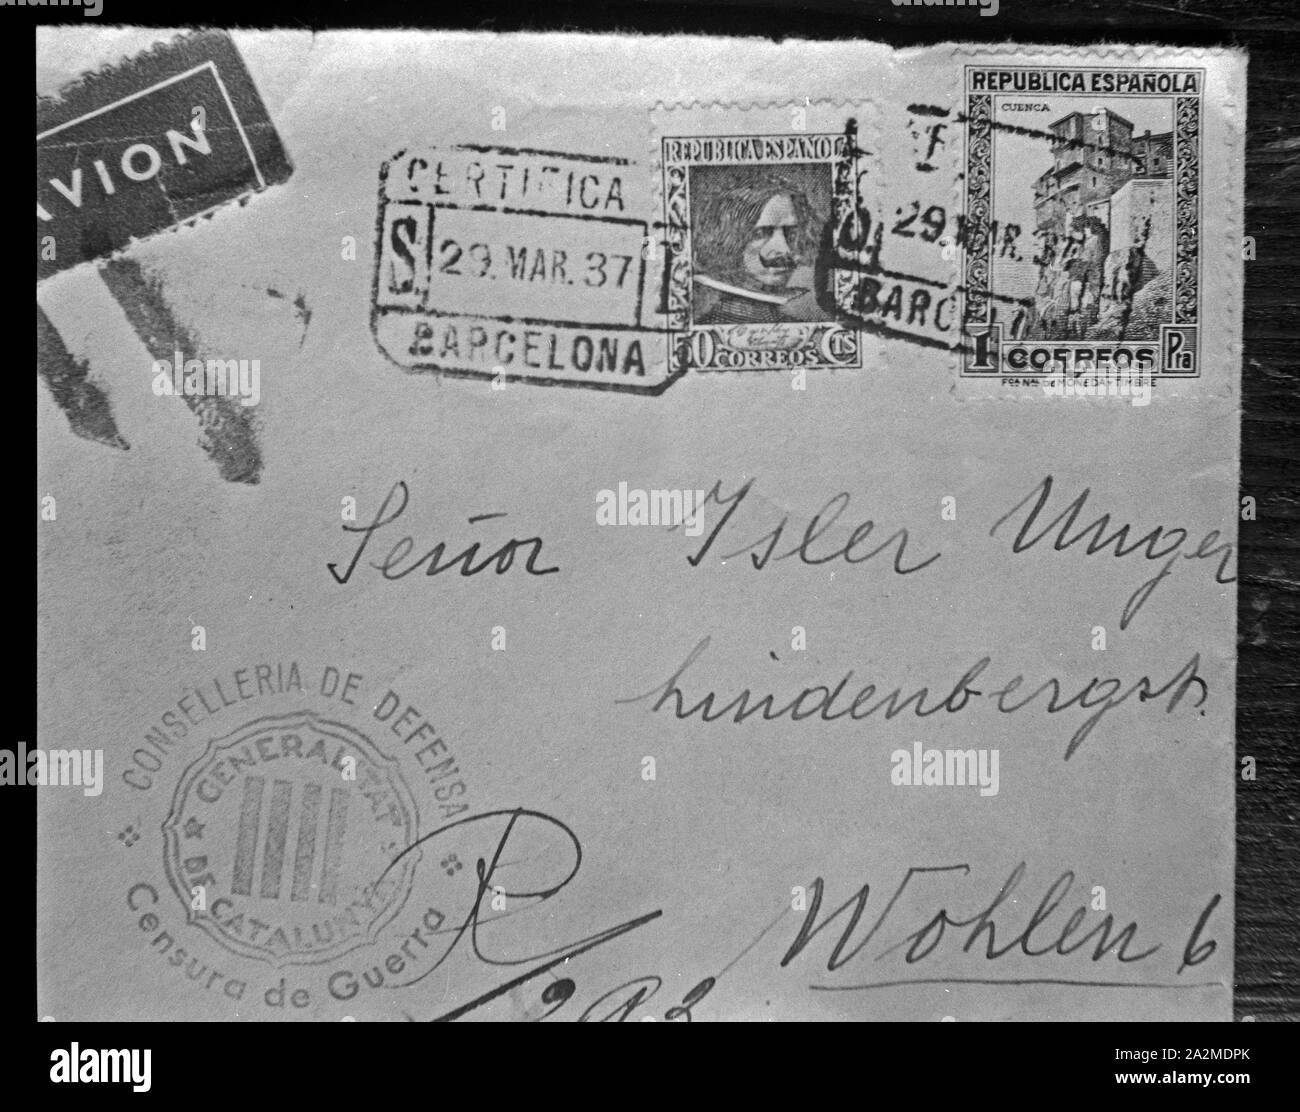 Reproduktion eines Briefumschlages aus Spanien vom 29. März 1937, Deutschland 1930er Jahre. Reproduction of an envelope from Spain from March 29th, 1937, Germany 1930s. Stock Photo